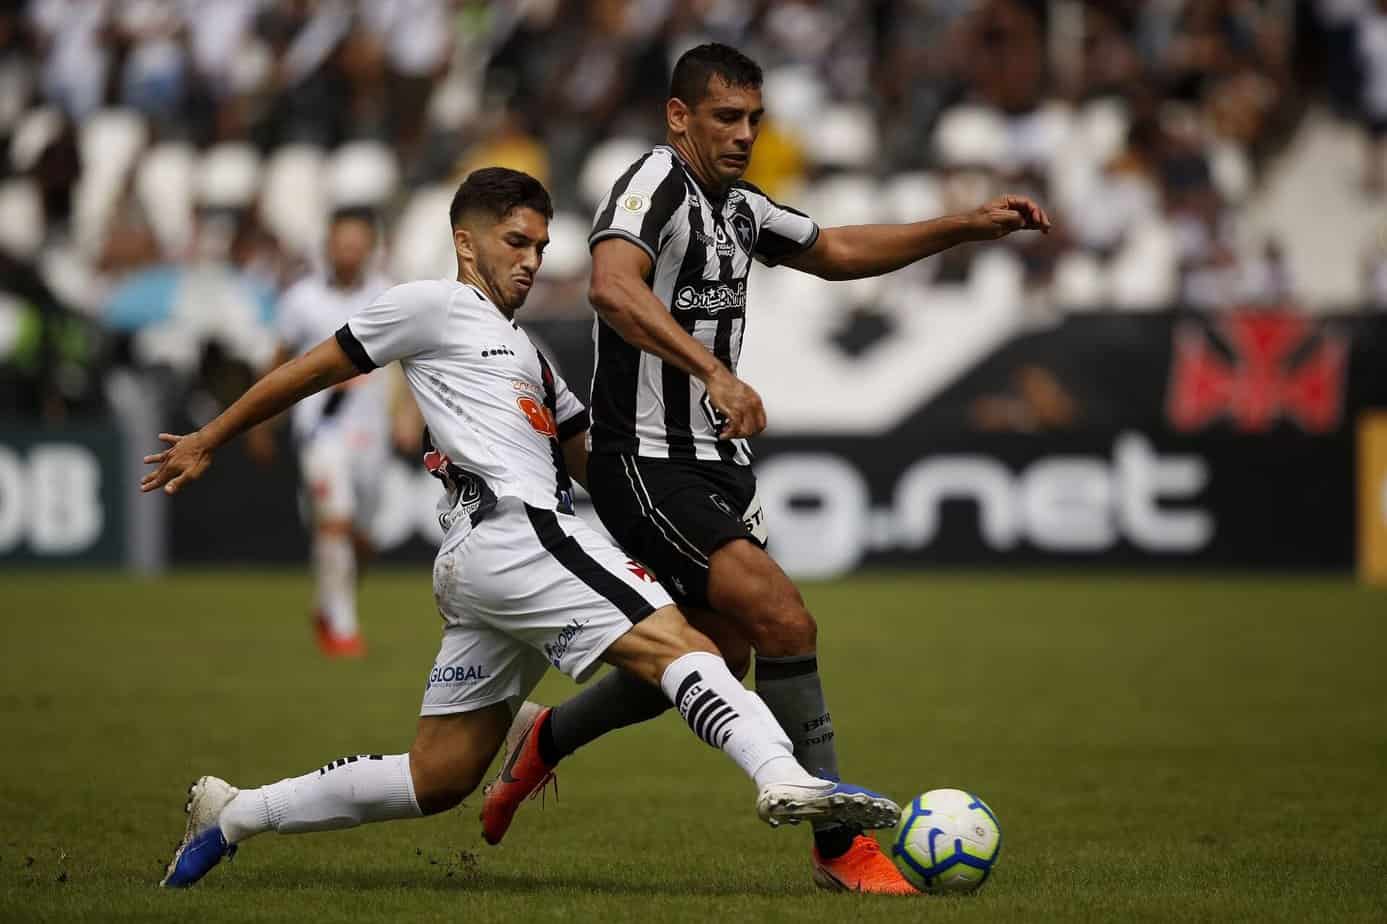 Botafogo vs. Vasco Preview and Betting Odds